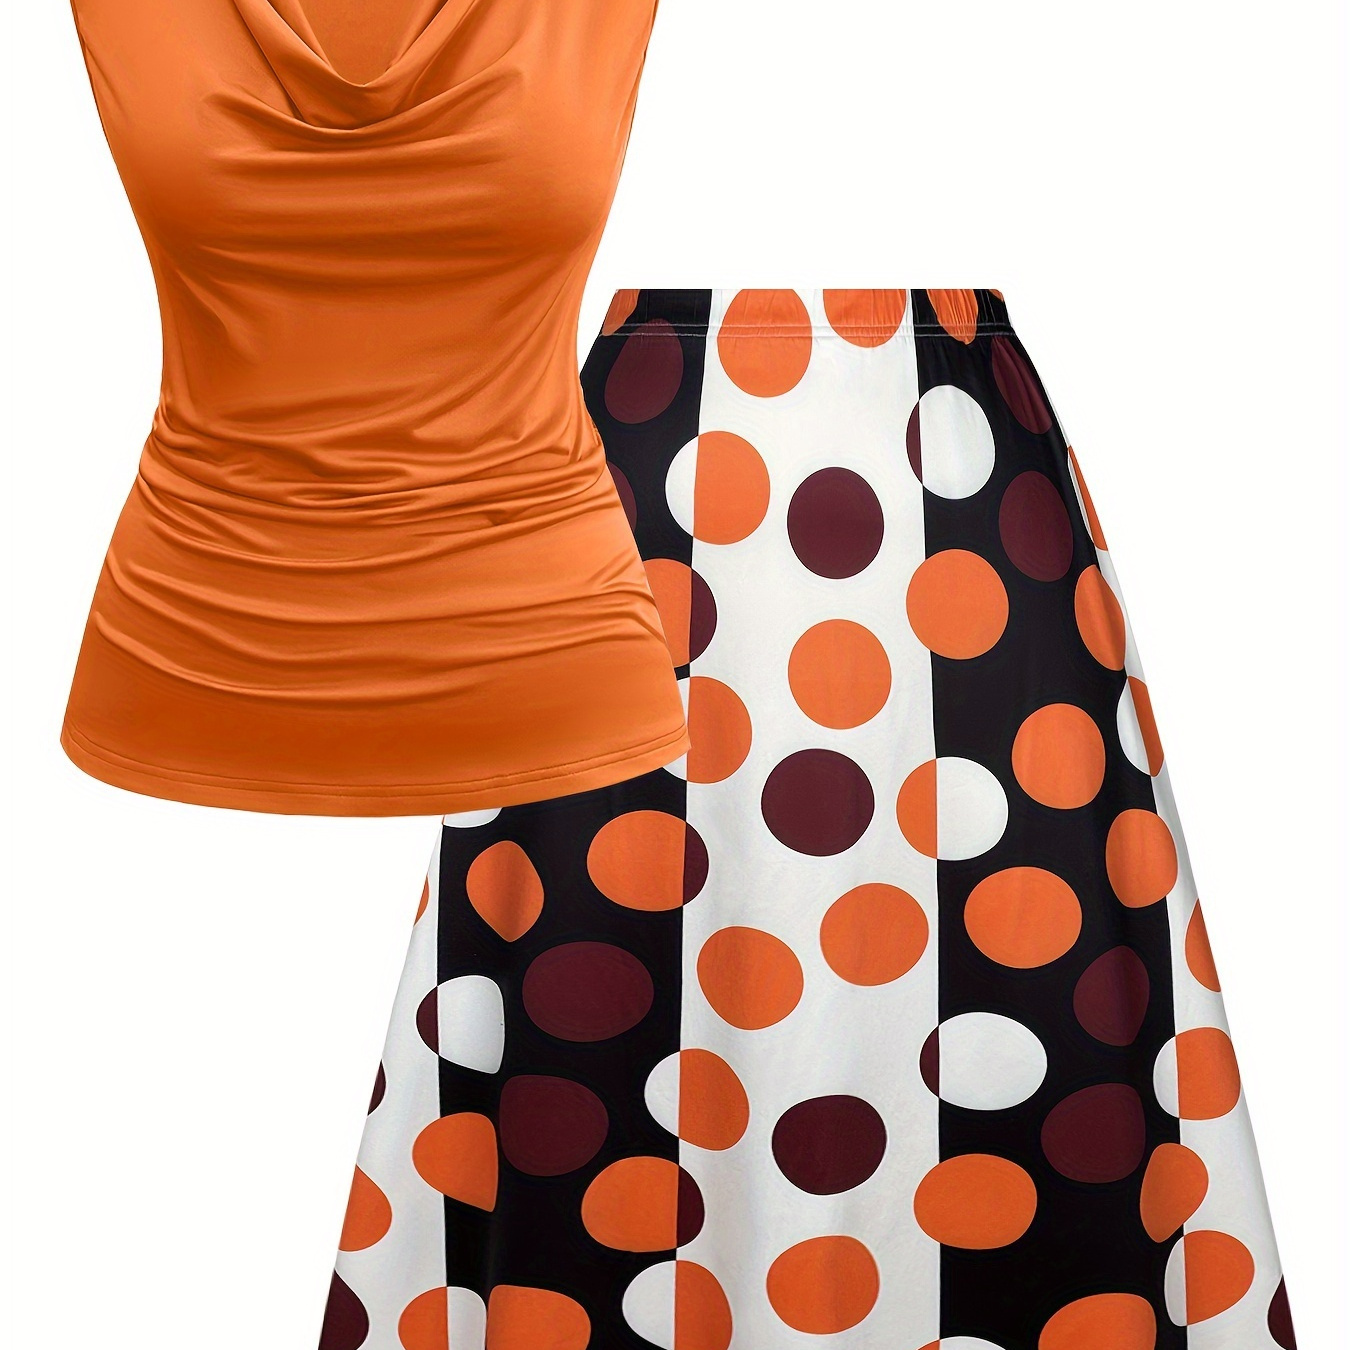 

Plus Size Polka Dot Print Two-piece Set, Cowl Neck Sleeveless Top & A-line Skirt Outfits, Women's Plus Size clothing